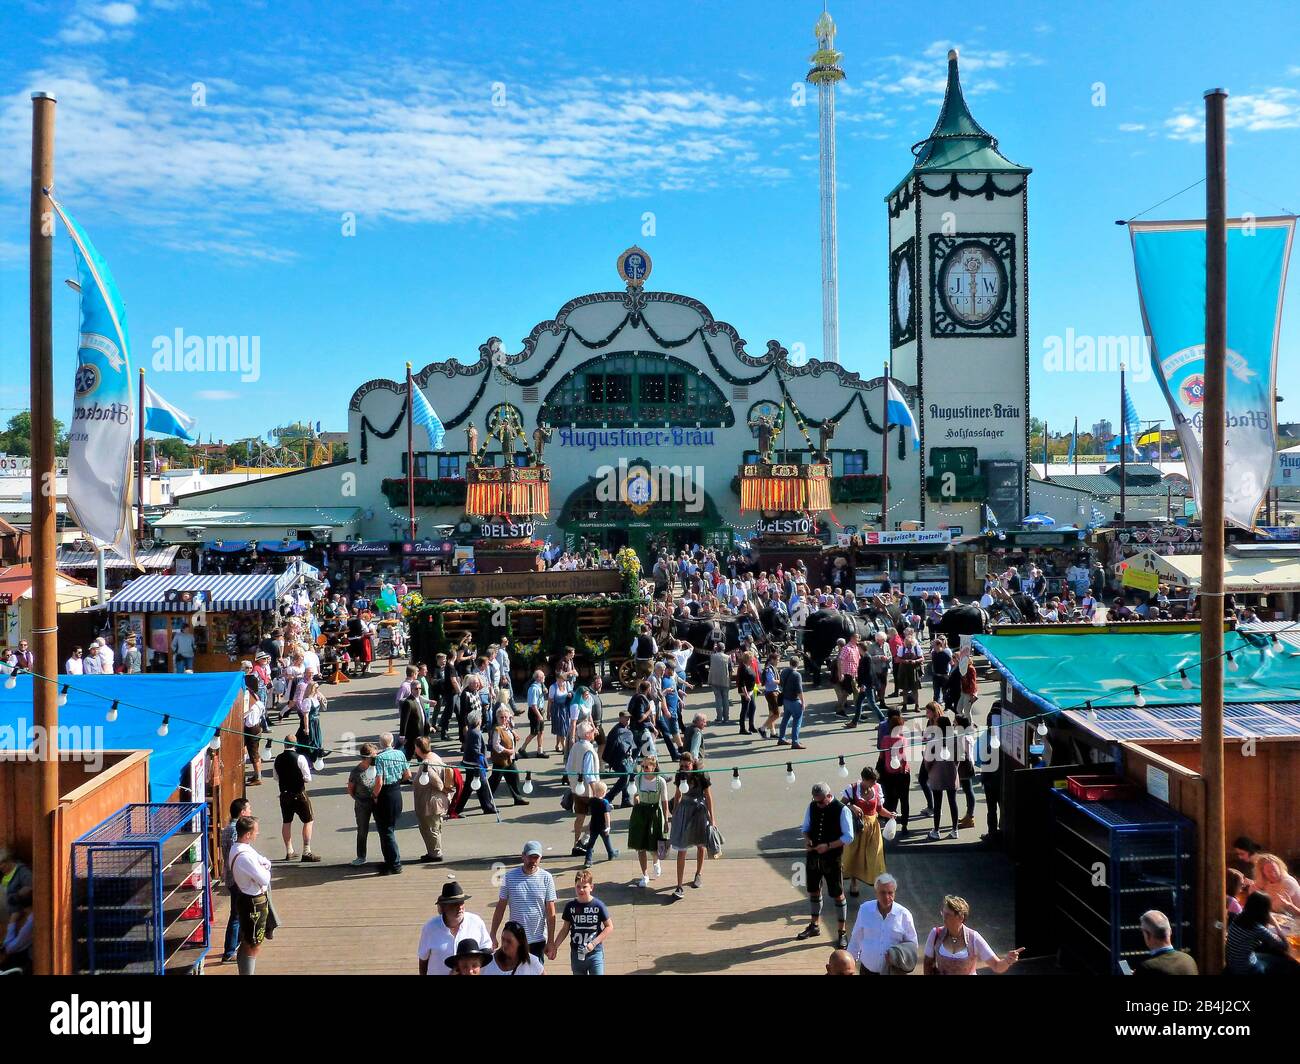 Germany, Bavaria, Munich, Oktoberfest, marquee, Augustiner-Bräu, Oktoberfest visitors, fixed team, stalls Stock Photo